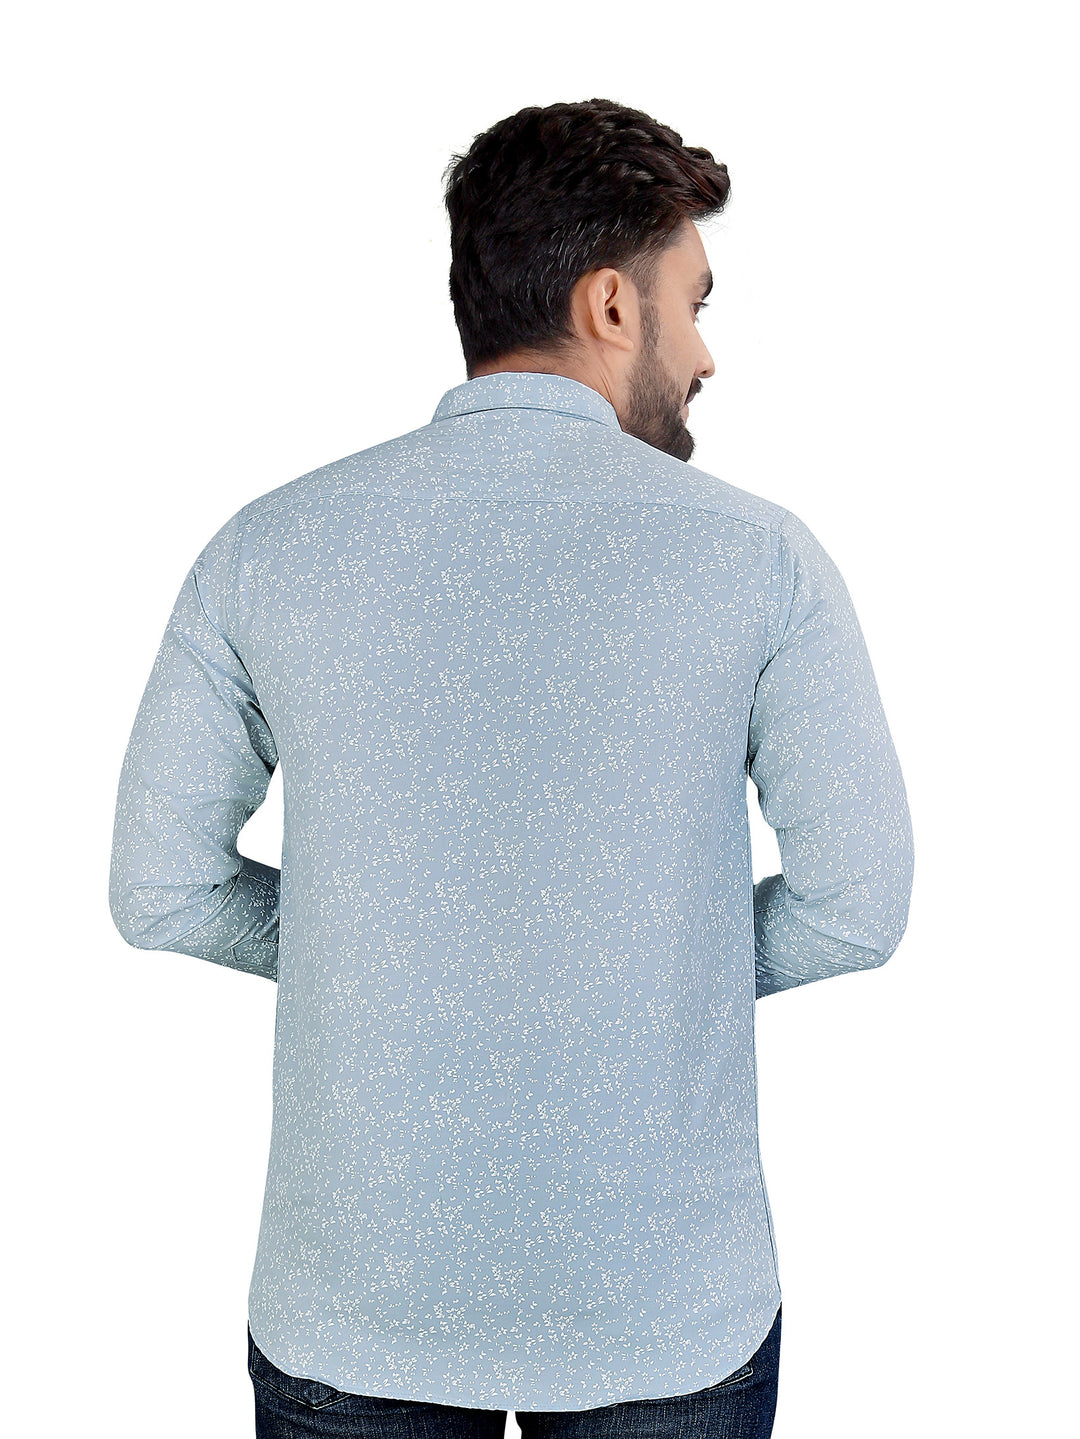 Grey Micro Floral Printed Shirt